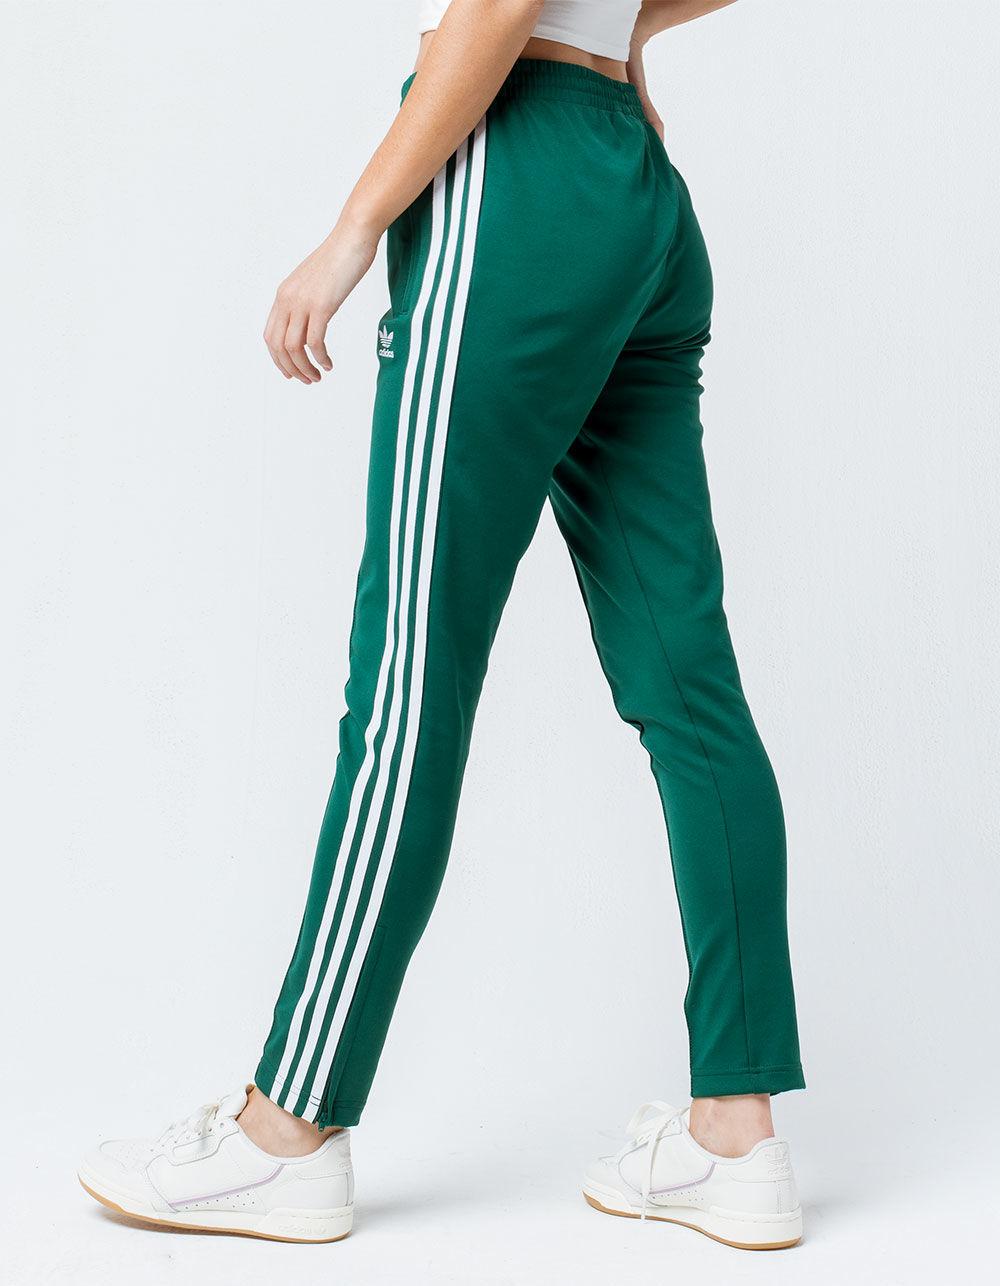 women's green adidas track pants